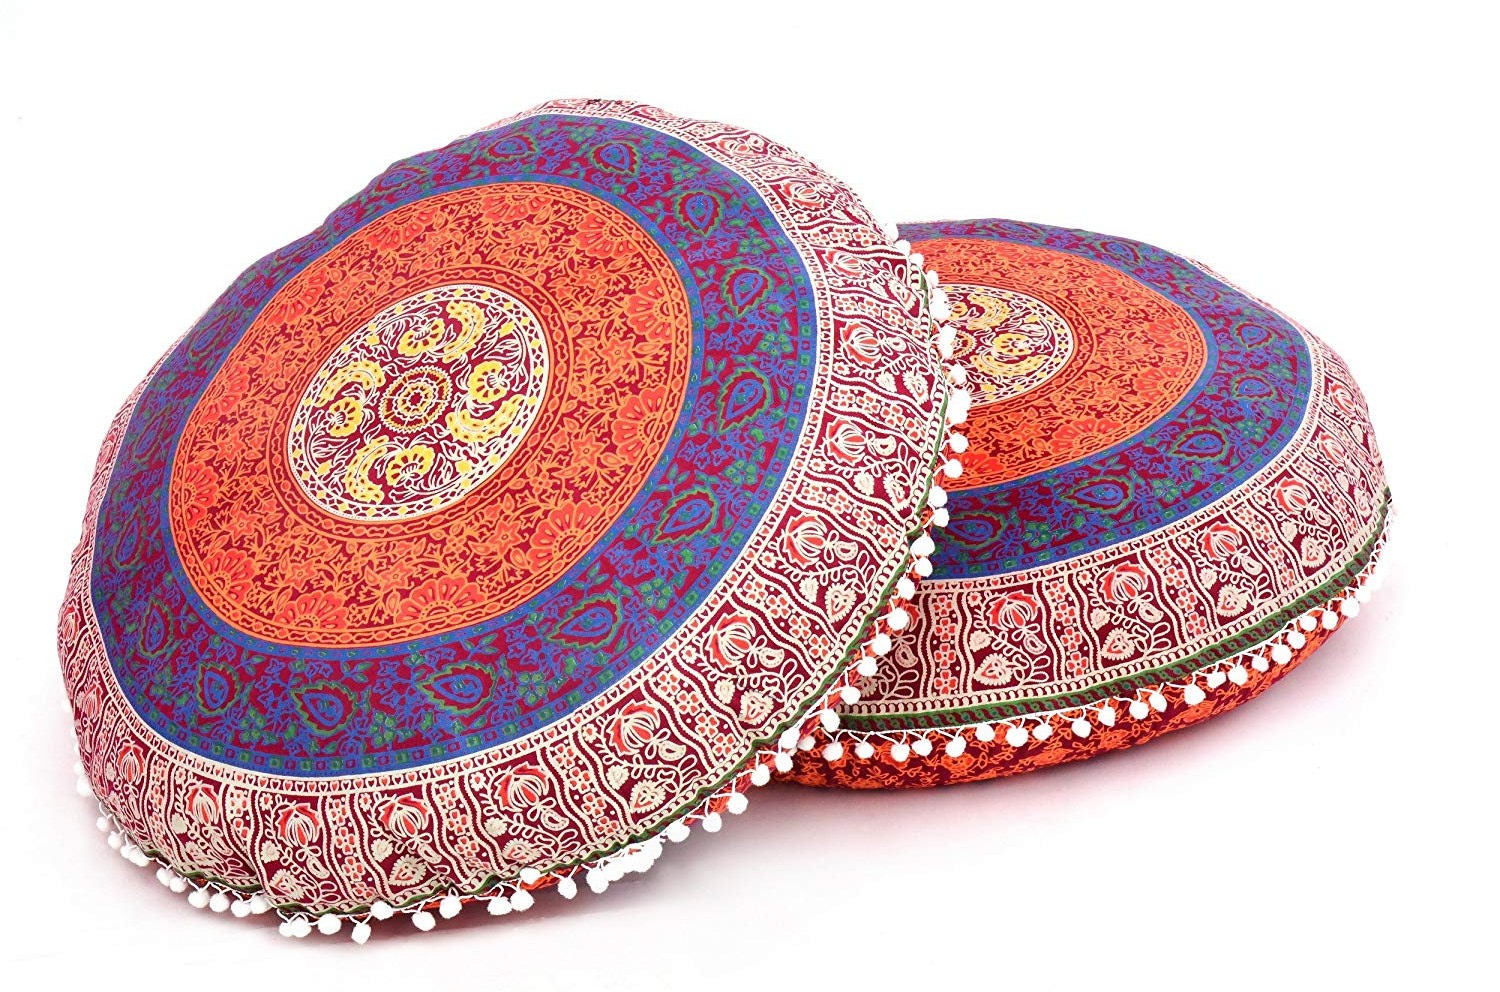 Radhy Krishna Fashions Floor Pillow Cover Decorative Mandala Pillow Sham Camel Indian Bohemian Ottoman Poufs Cover Pom Pom Pillow Cases Outdoor Cushion Cover